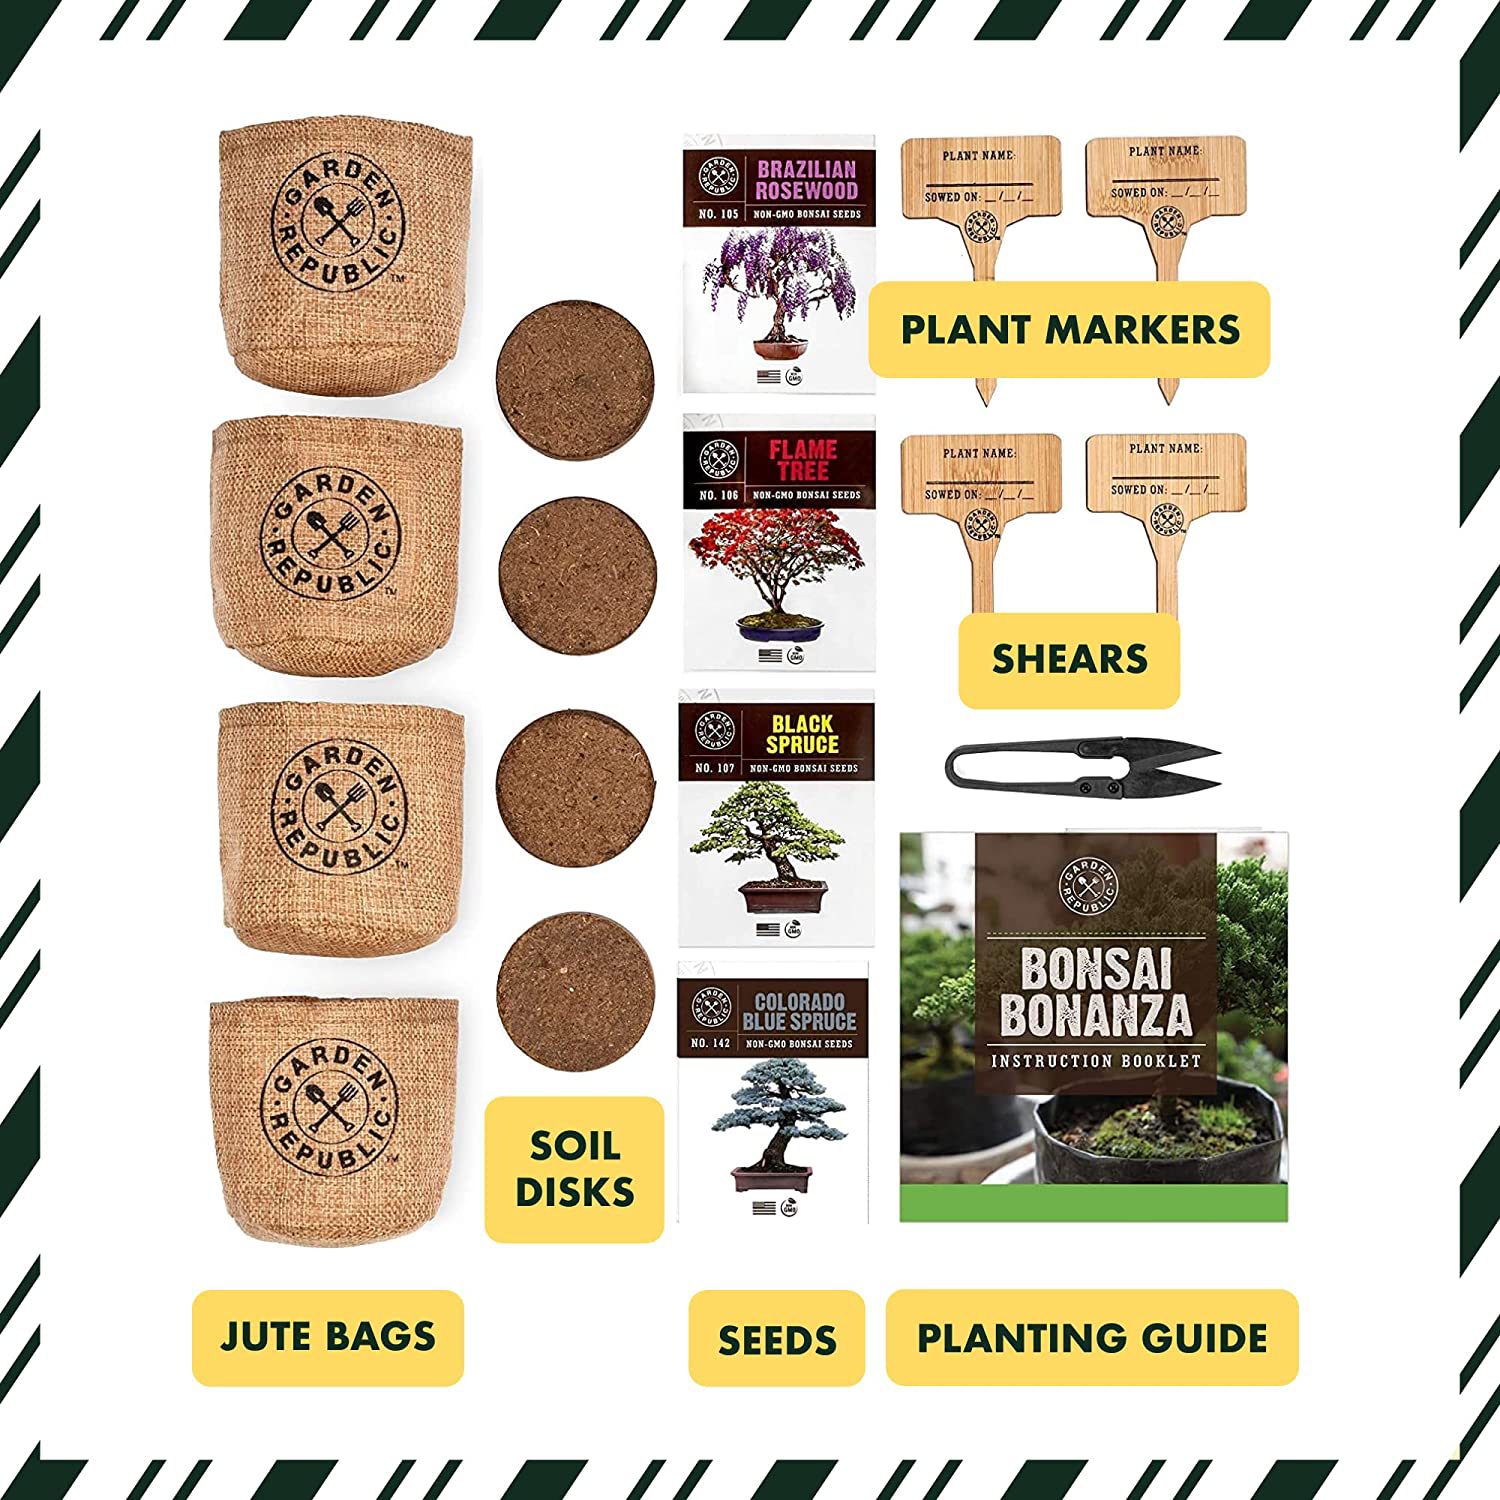 Bonsai Tree Seed Starter Kit - Mini Bonsai Plant Growing Kit, 4 Types of Seeds, Potting Soil, Pots, Pruning Shears Scissor Tool, Plant Markers, Wood Gift Box, Indoor Garden Gardening Gifts Ideas